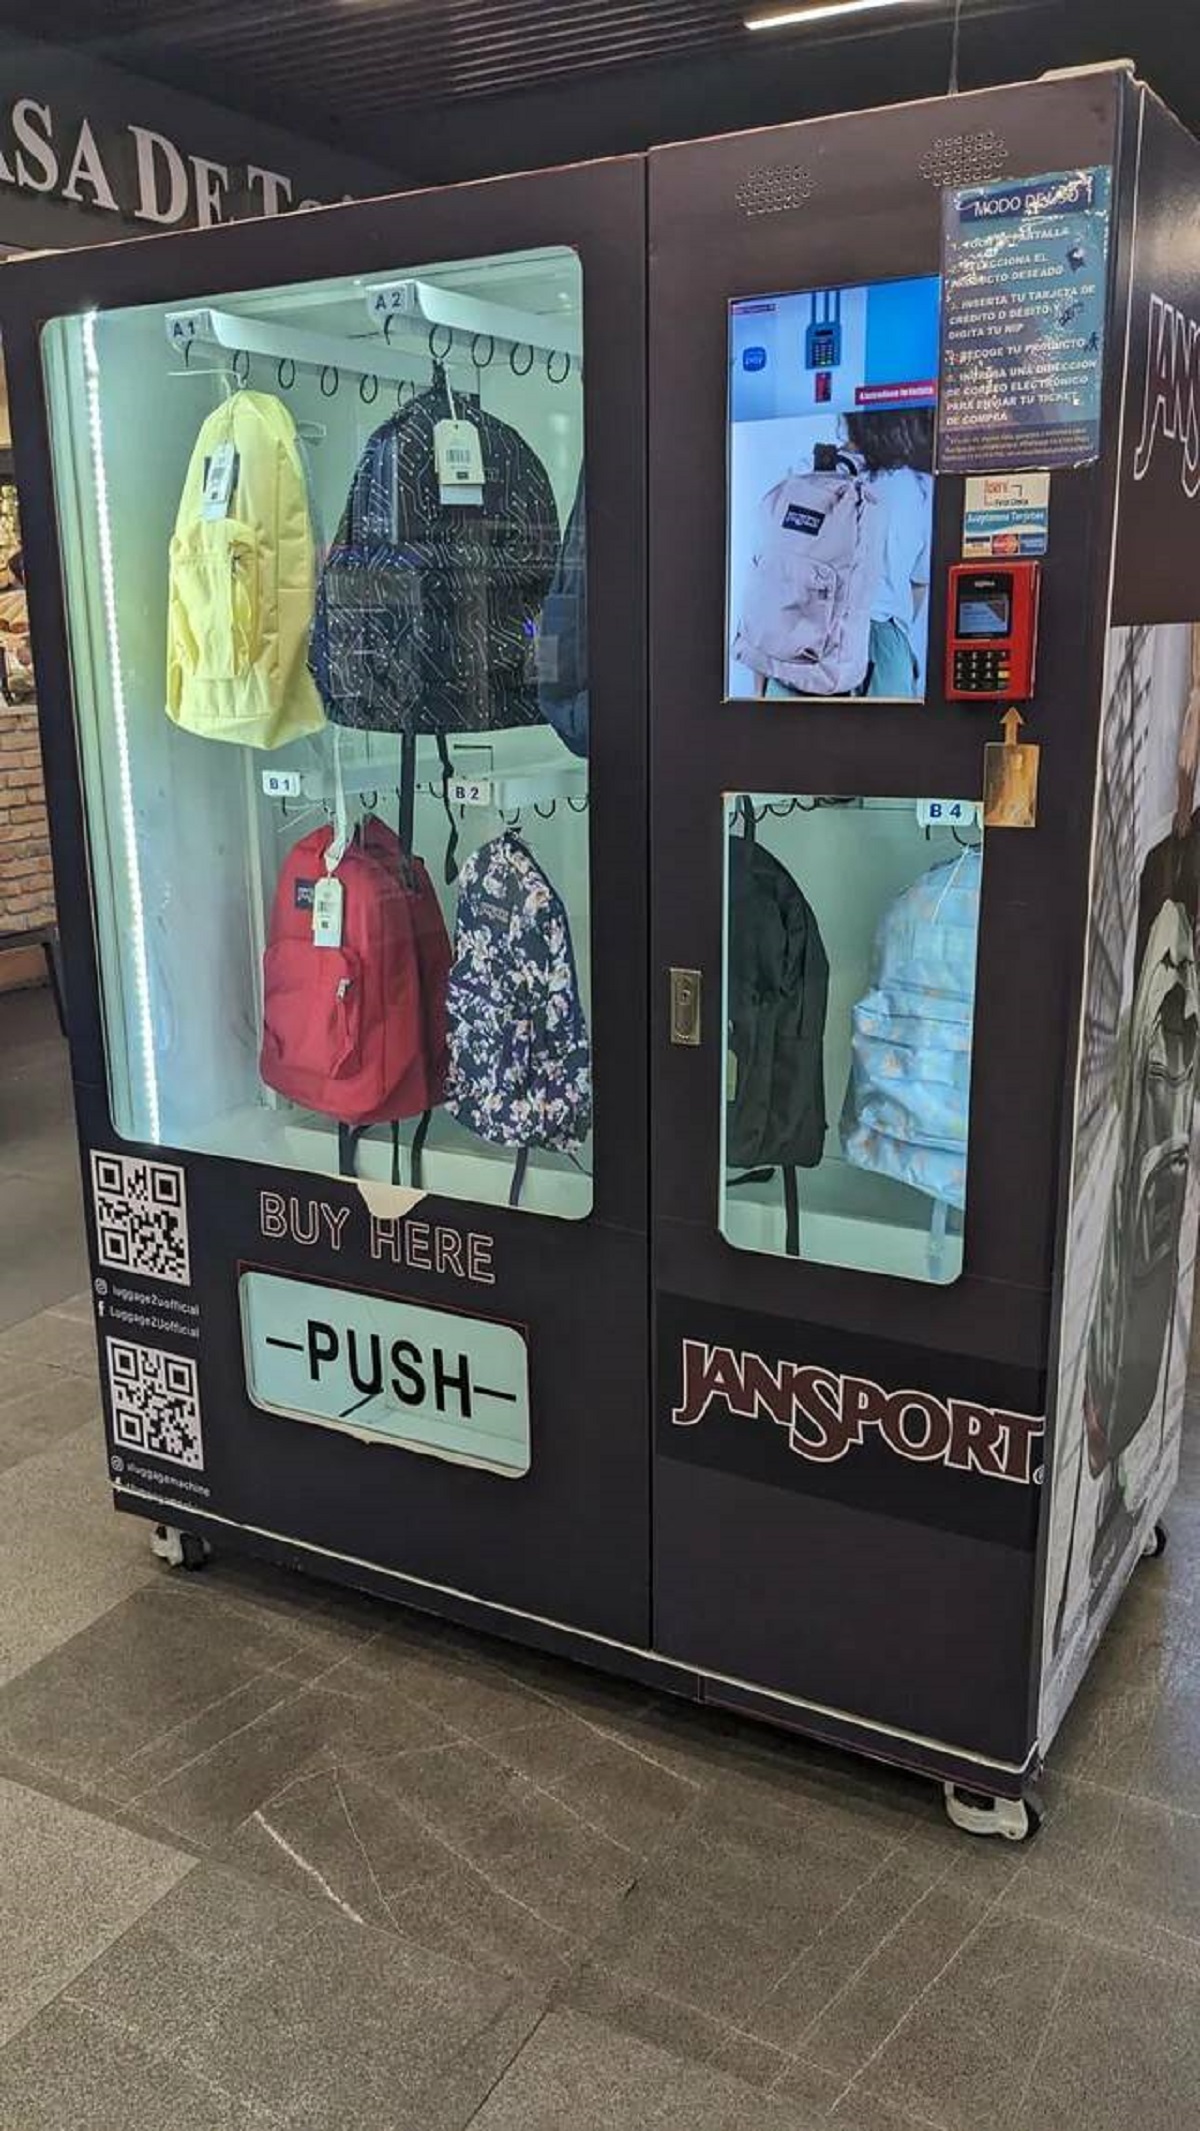 vending machine - Sadet 2000 4 Dad 113 922 9000 Co Buy Here Push Jansport